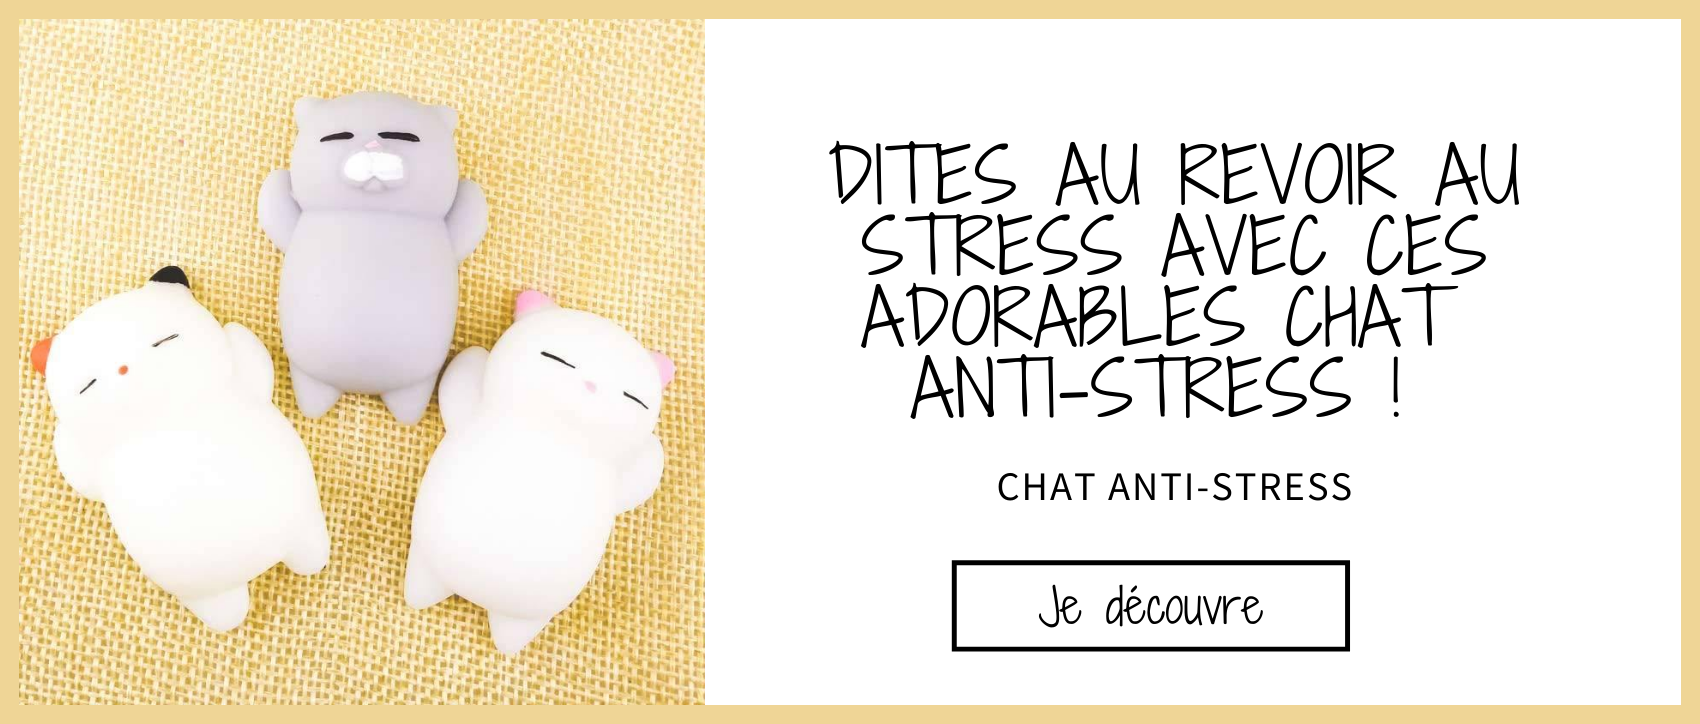 Chat anti-stress